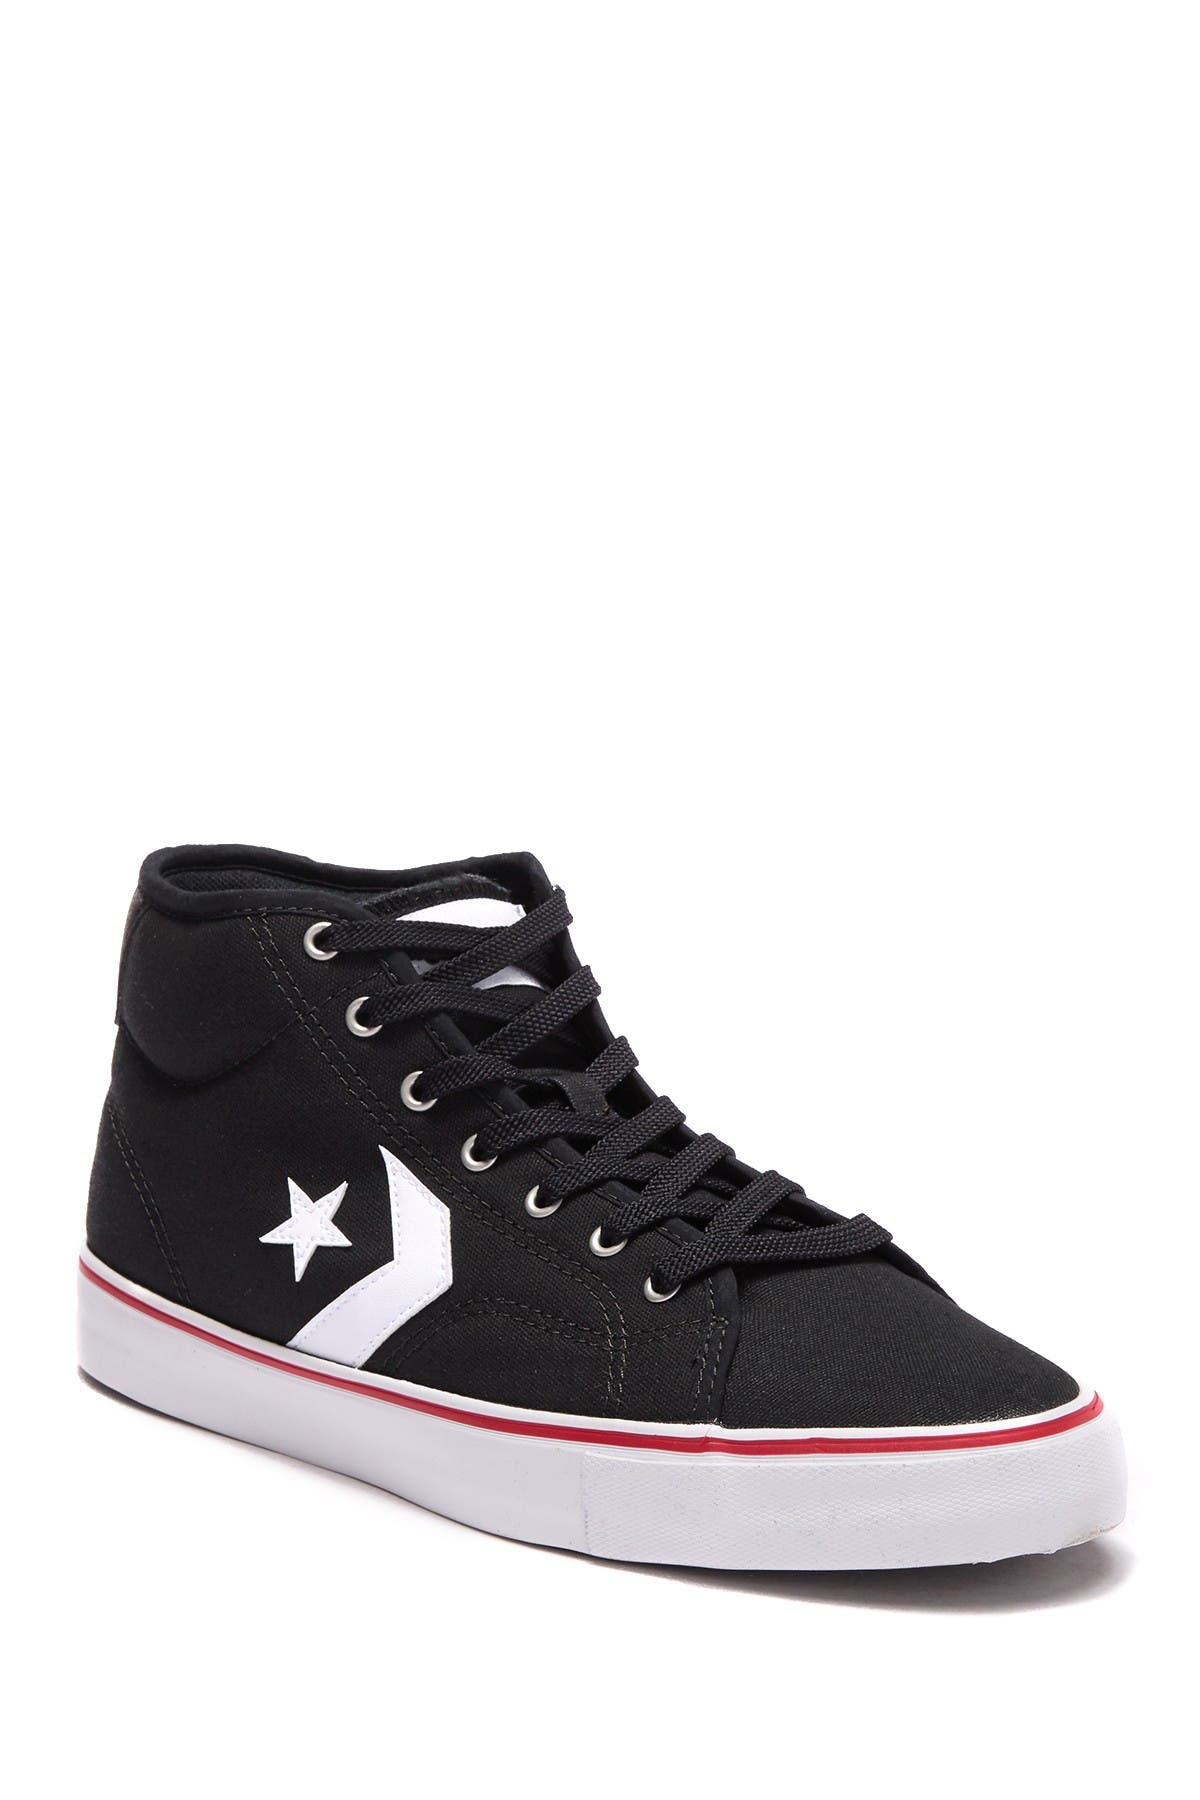 Converse | Star Replay Sneaker 